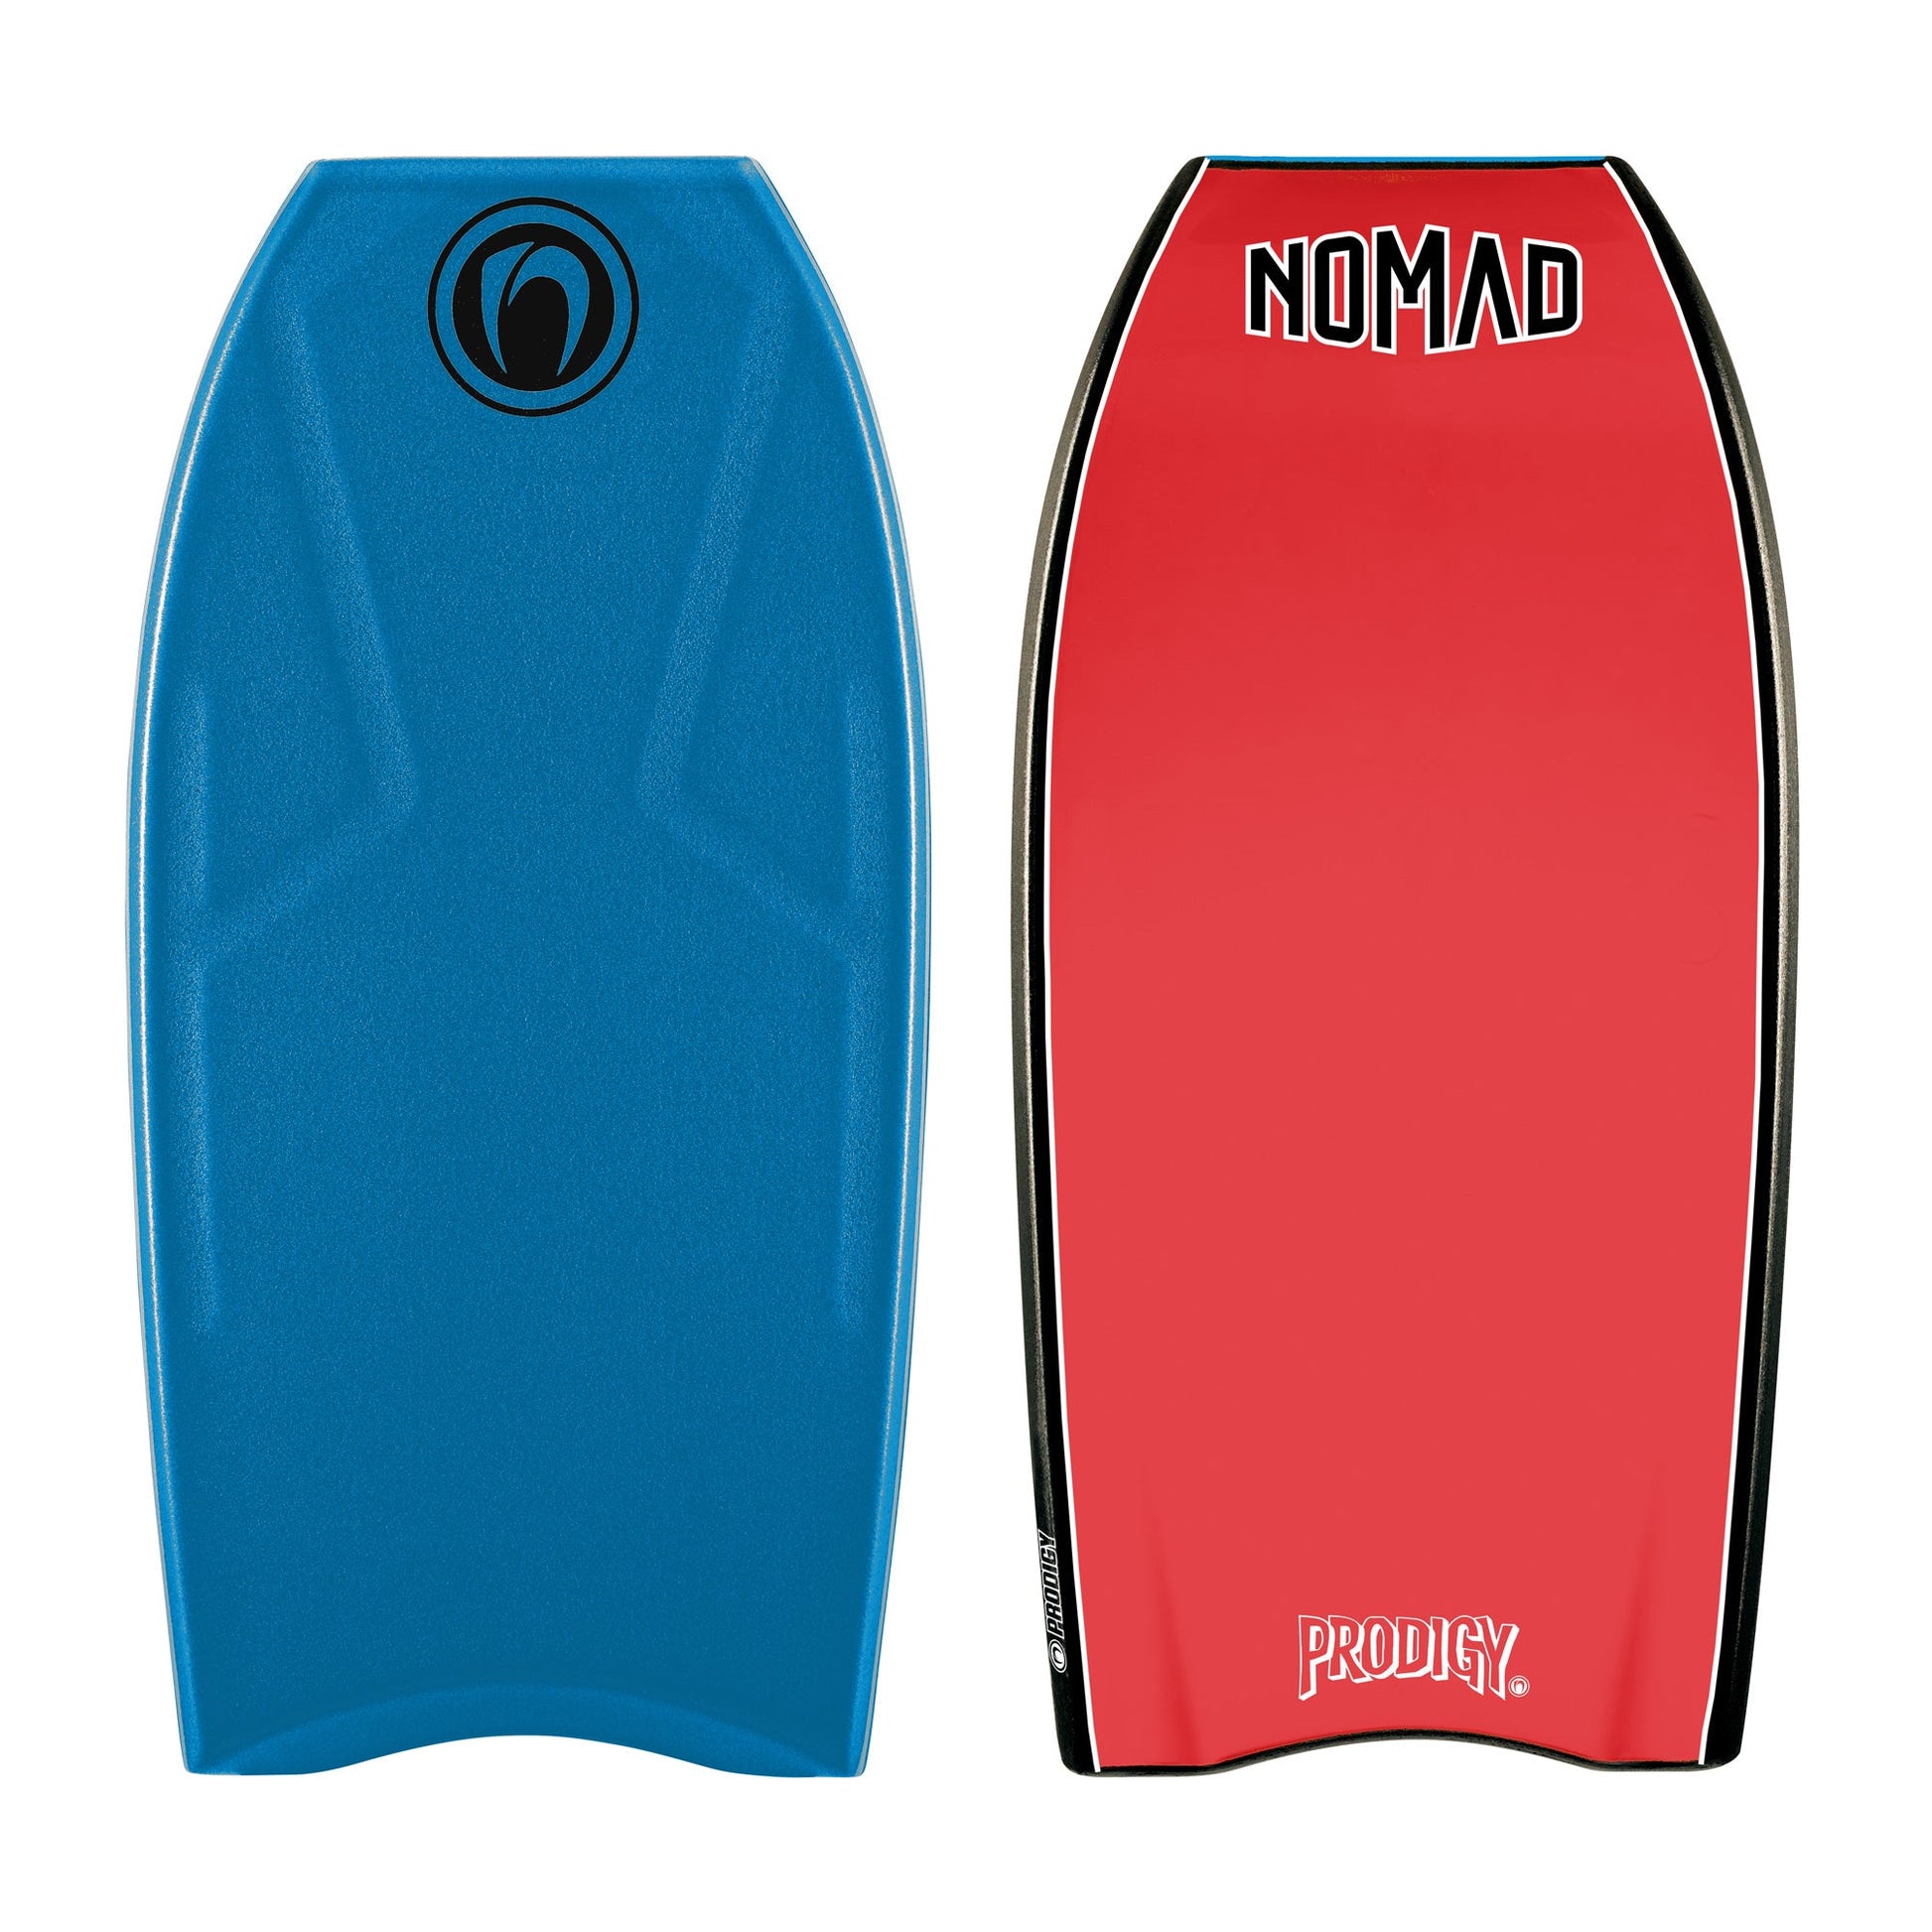 Nomad Prodigy ZED Core Cres Double Stringer Bodyboard - Star Surf + Skate